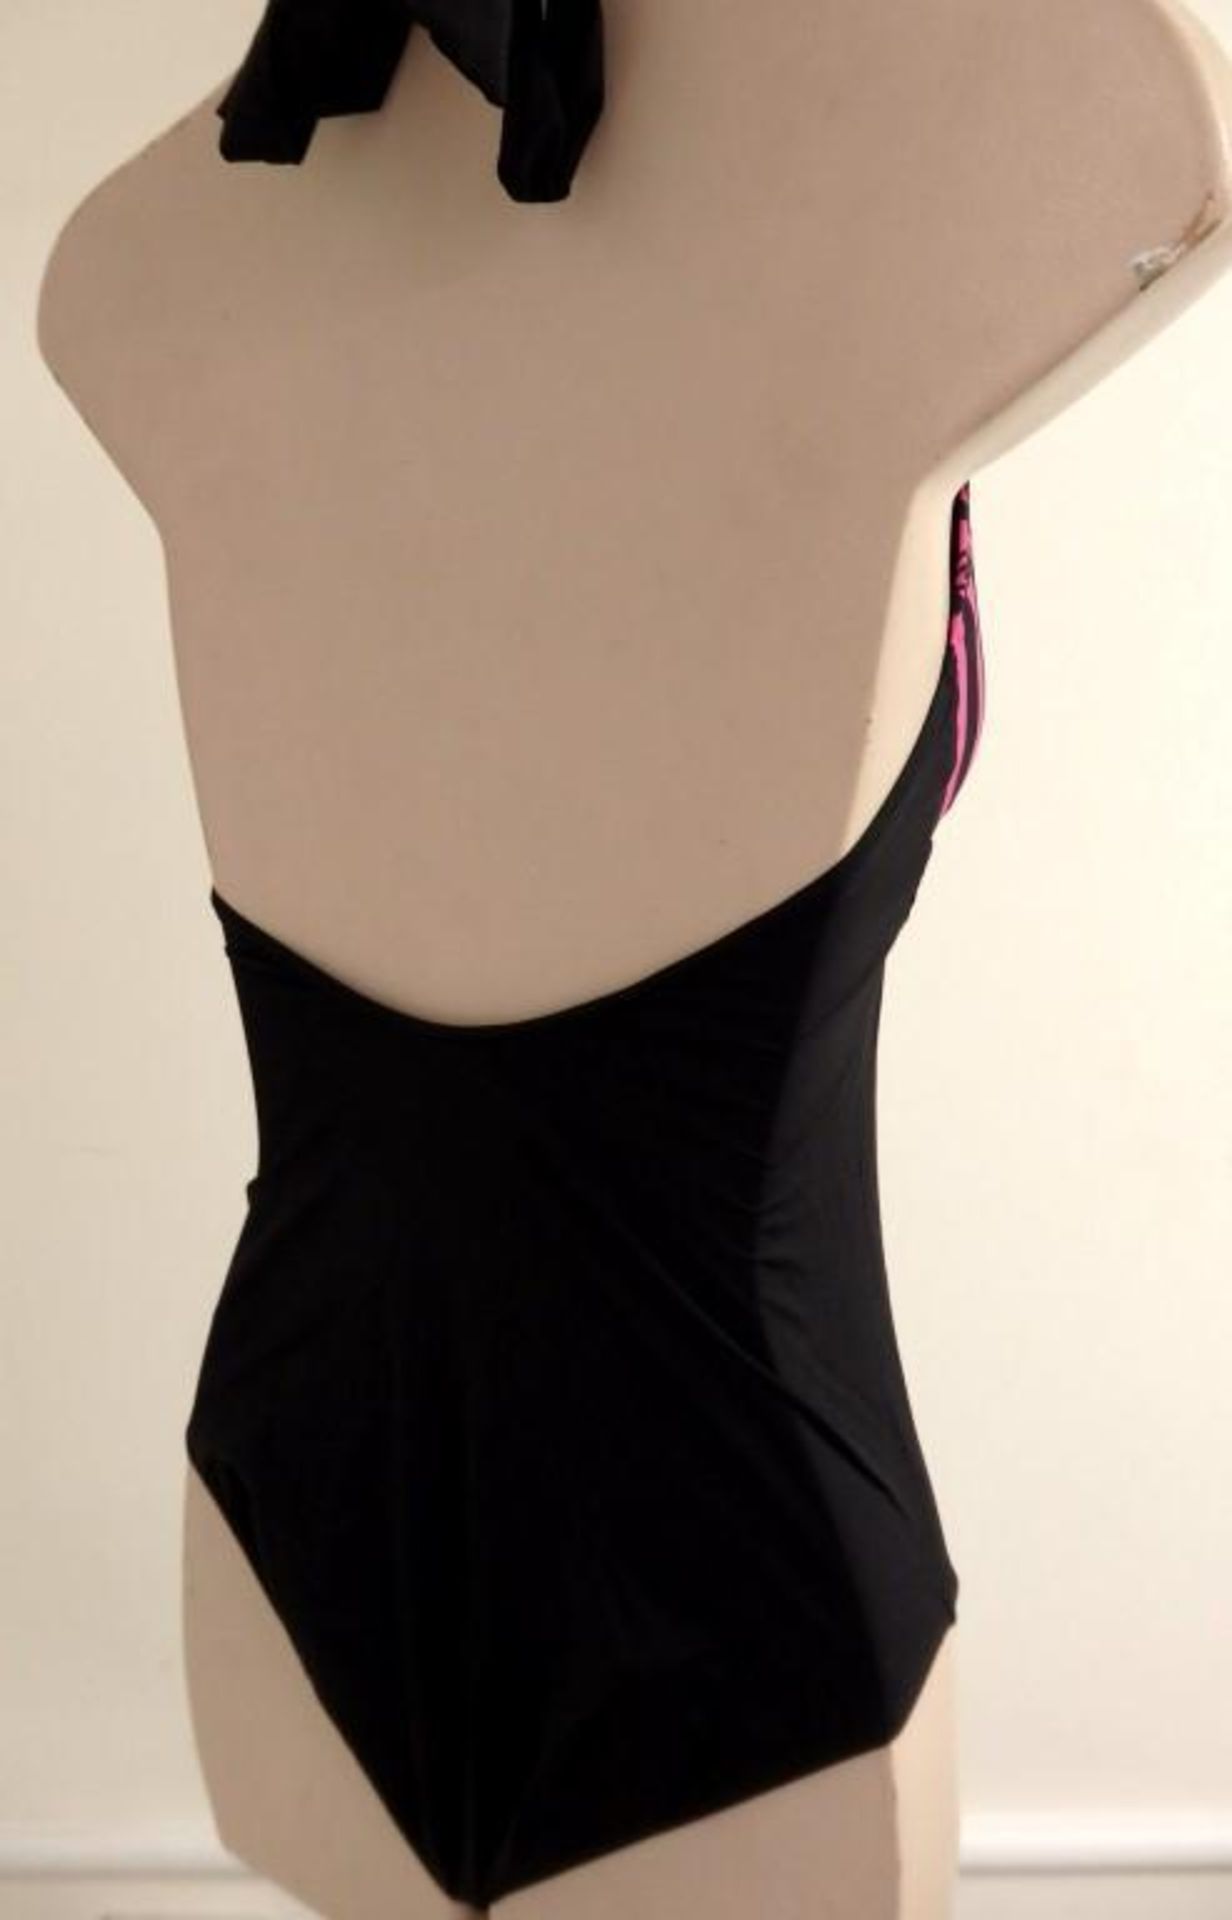 1 x Rasurel - Black/Pink patterned - Borneo Swimsuit - R20434 - Size 2C - UK 32 - Fr 85 - EU/Int 70 - Image 6 of 7